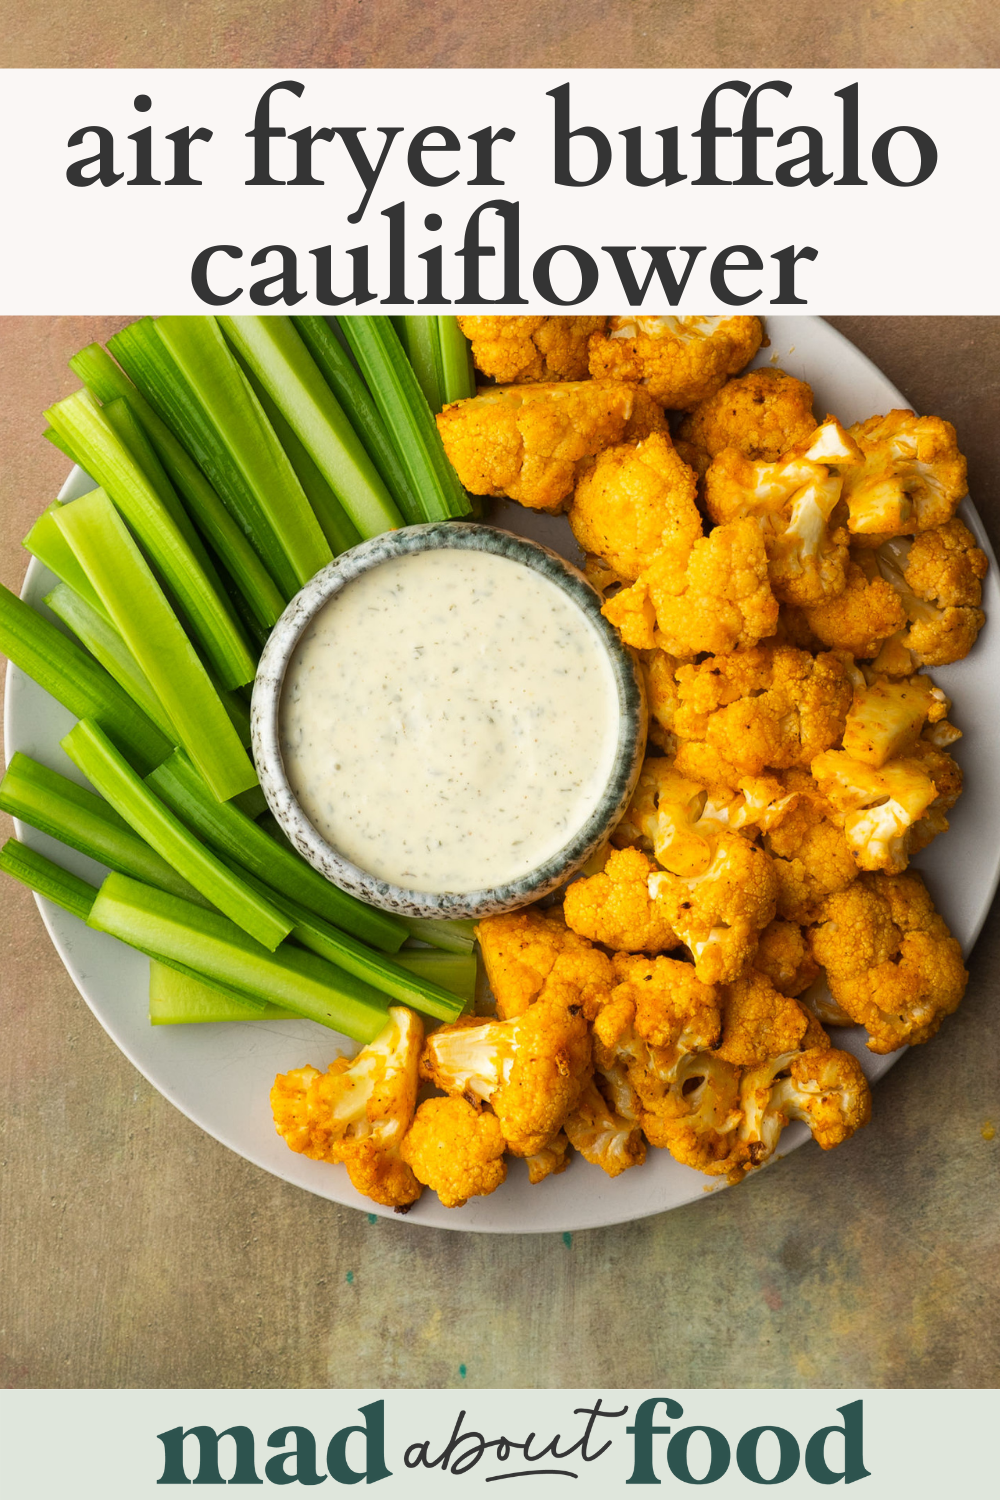 Image for pinning Air Fryer Buffalo Cauliflower recipe on Pinterest